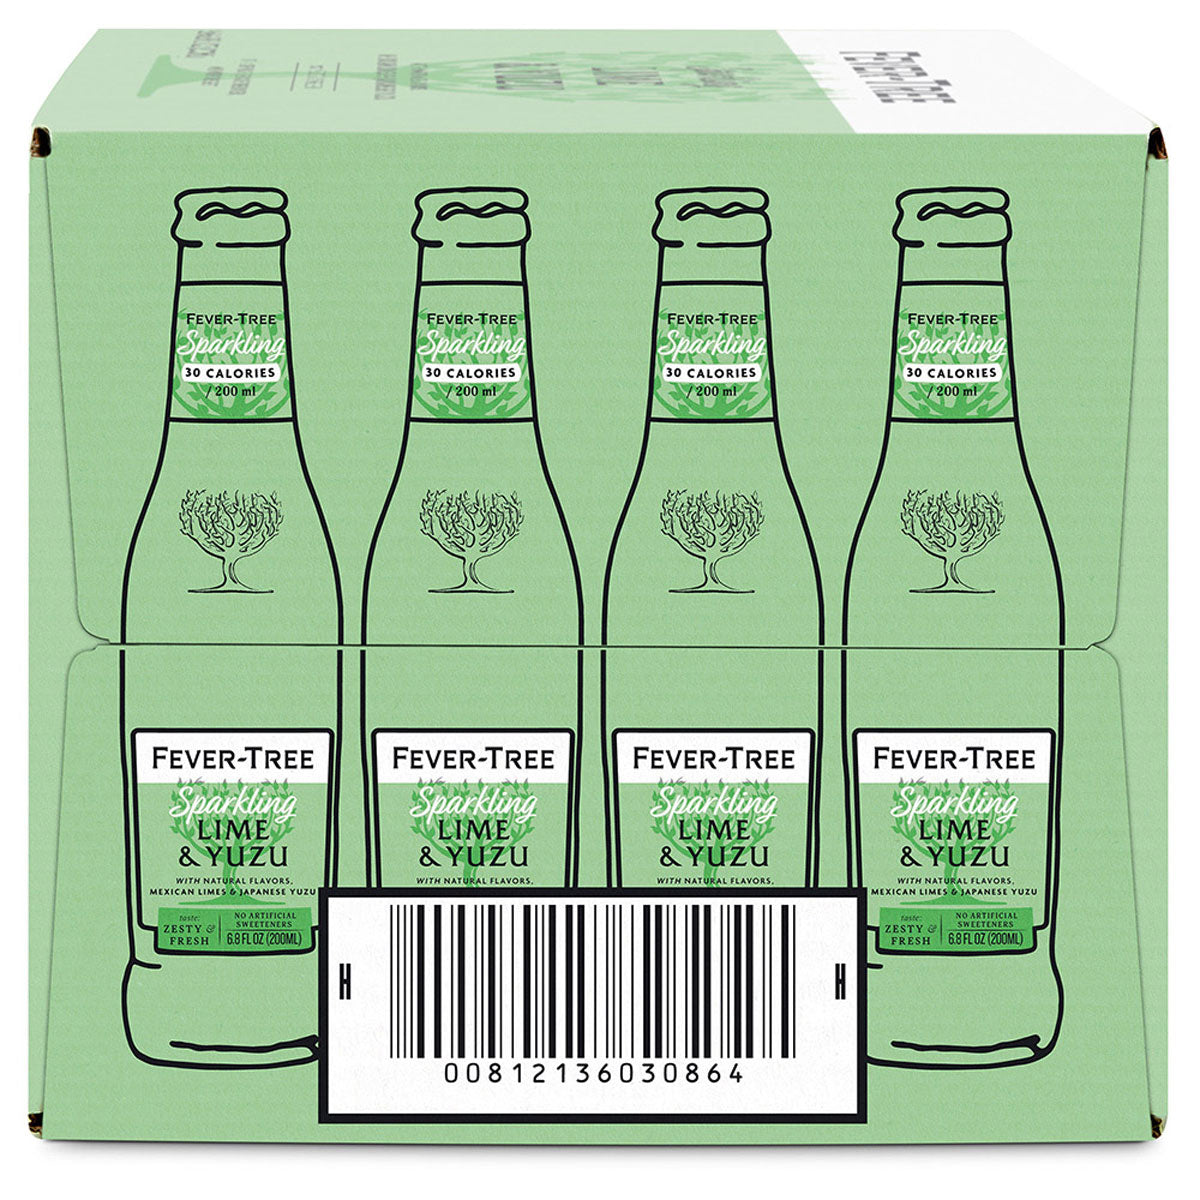 Fever-Tree Sparkling Lime & Yuzu Soda 200 ML